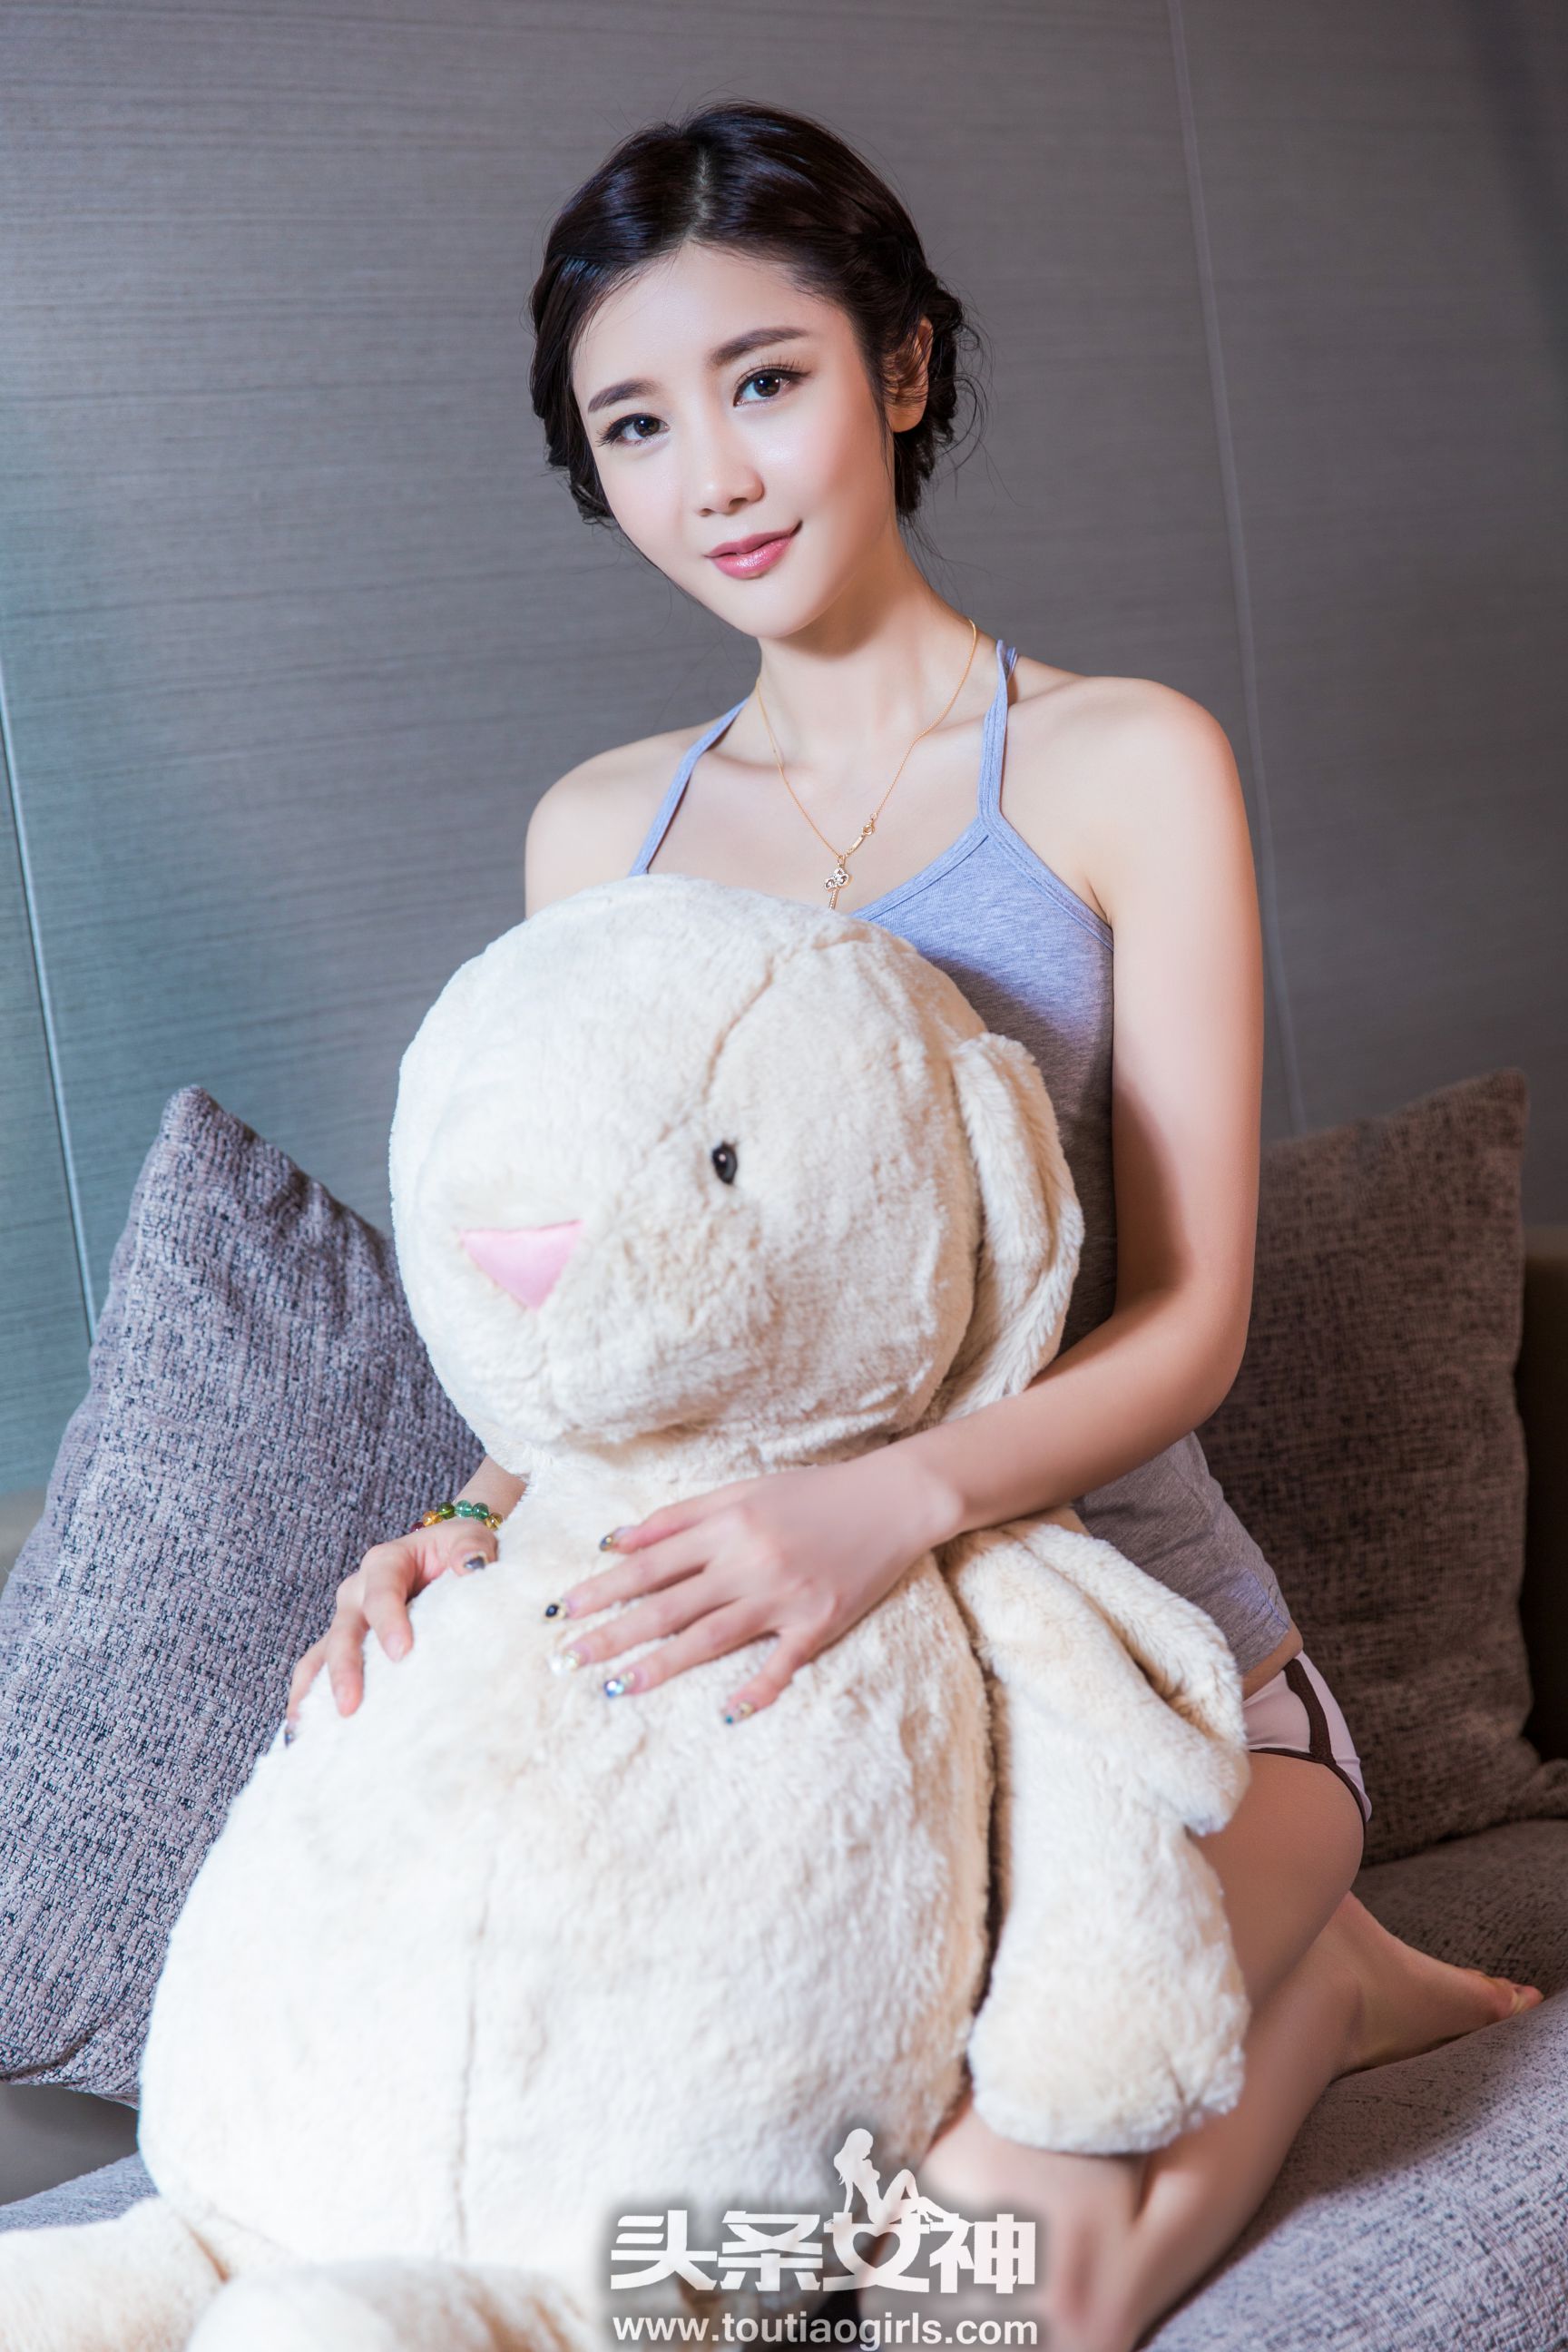 Su Liang (Xiaoyu) “I Love Tutu” [Headline Goddess] Photo Album